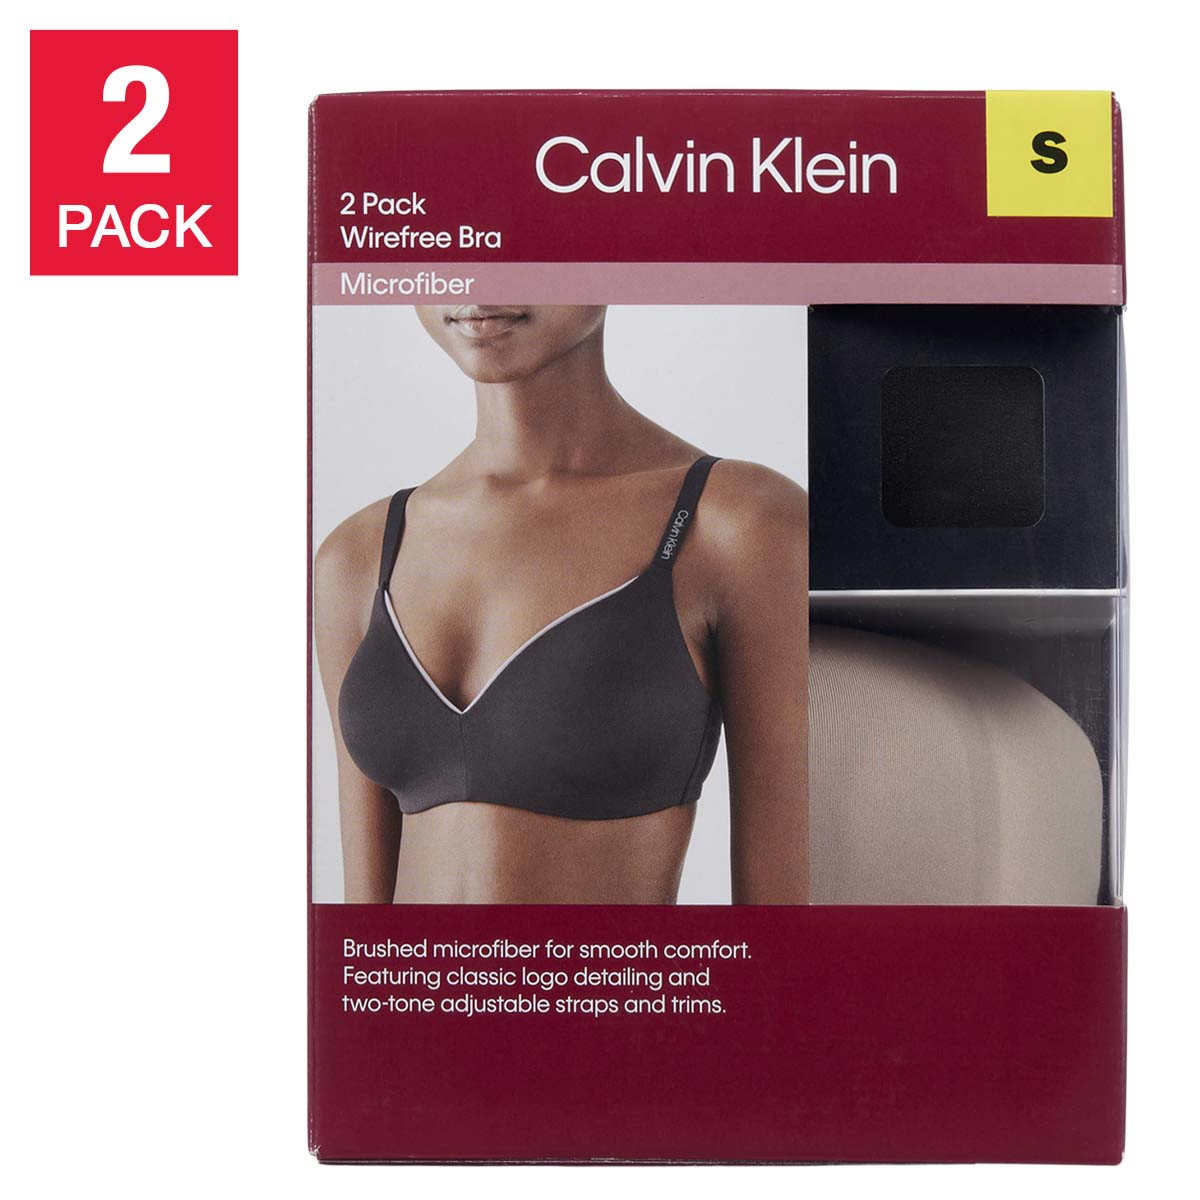 Cotton-blend Sports Bra With Printed Logo Black Calvin Klein